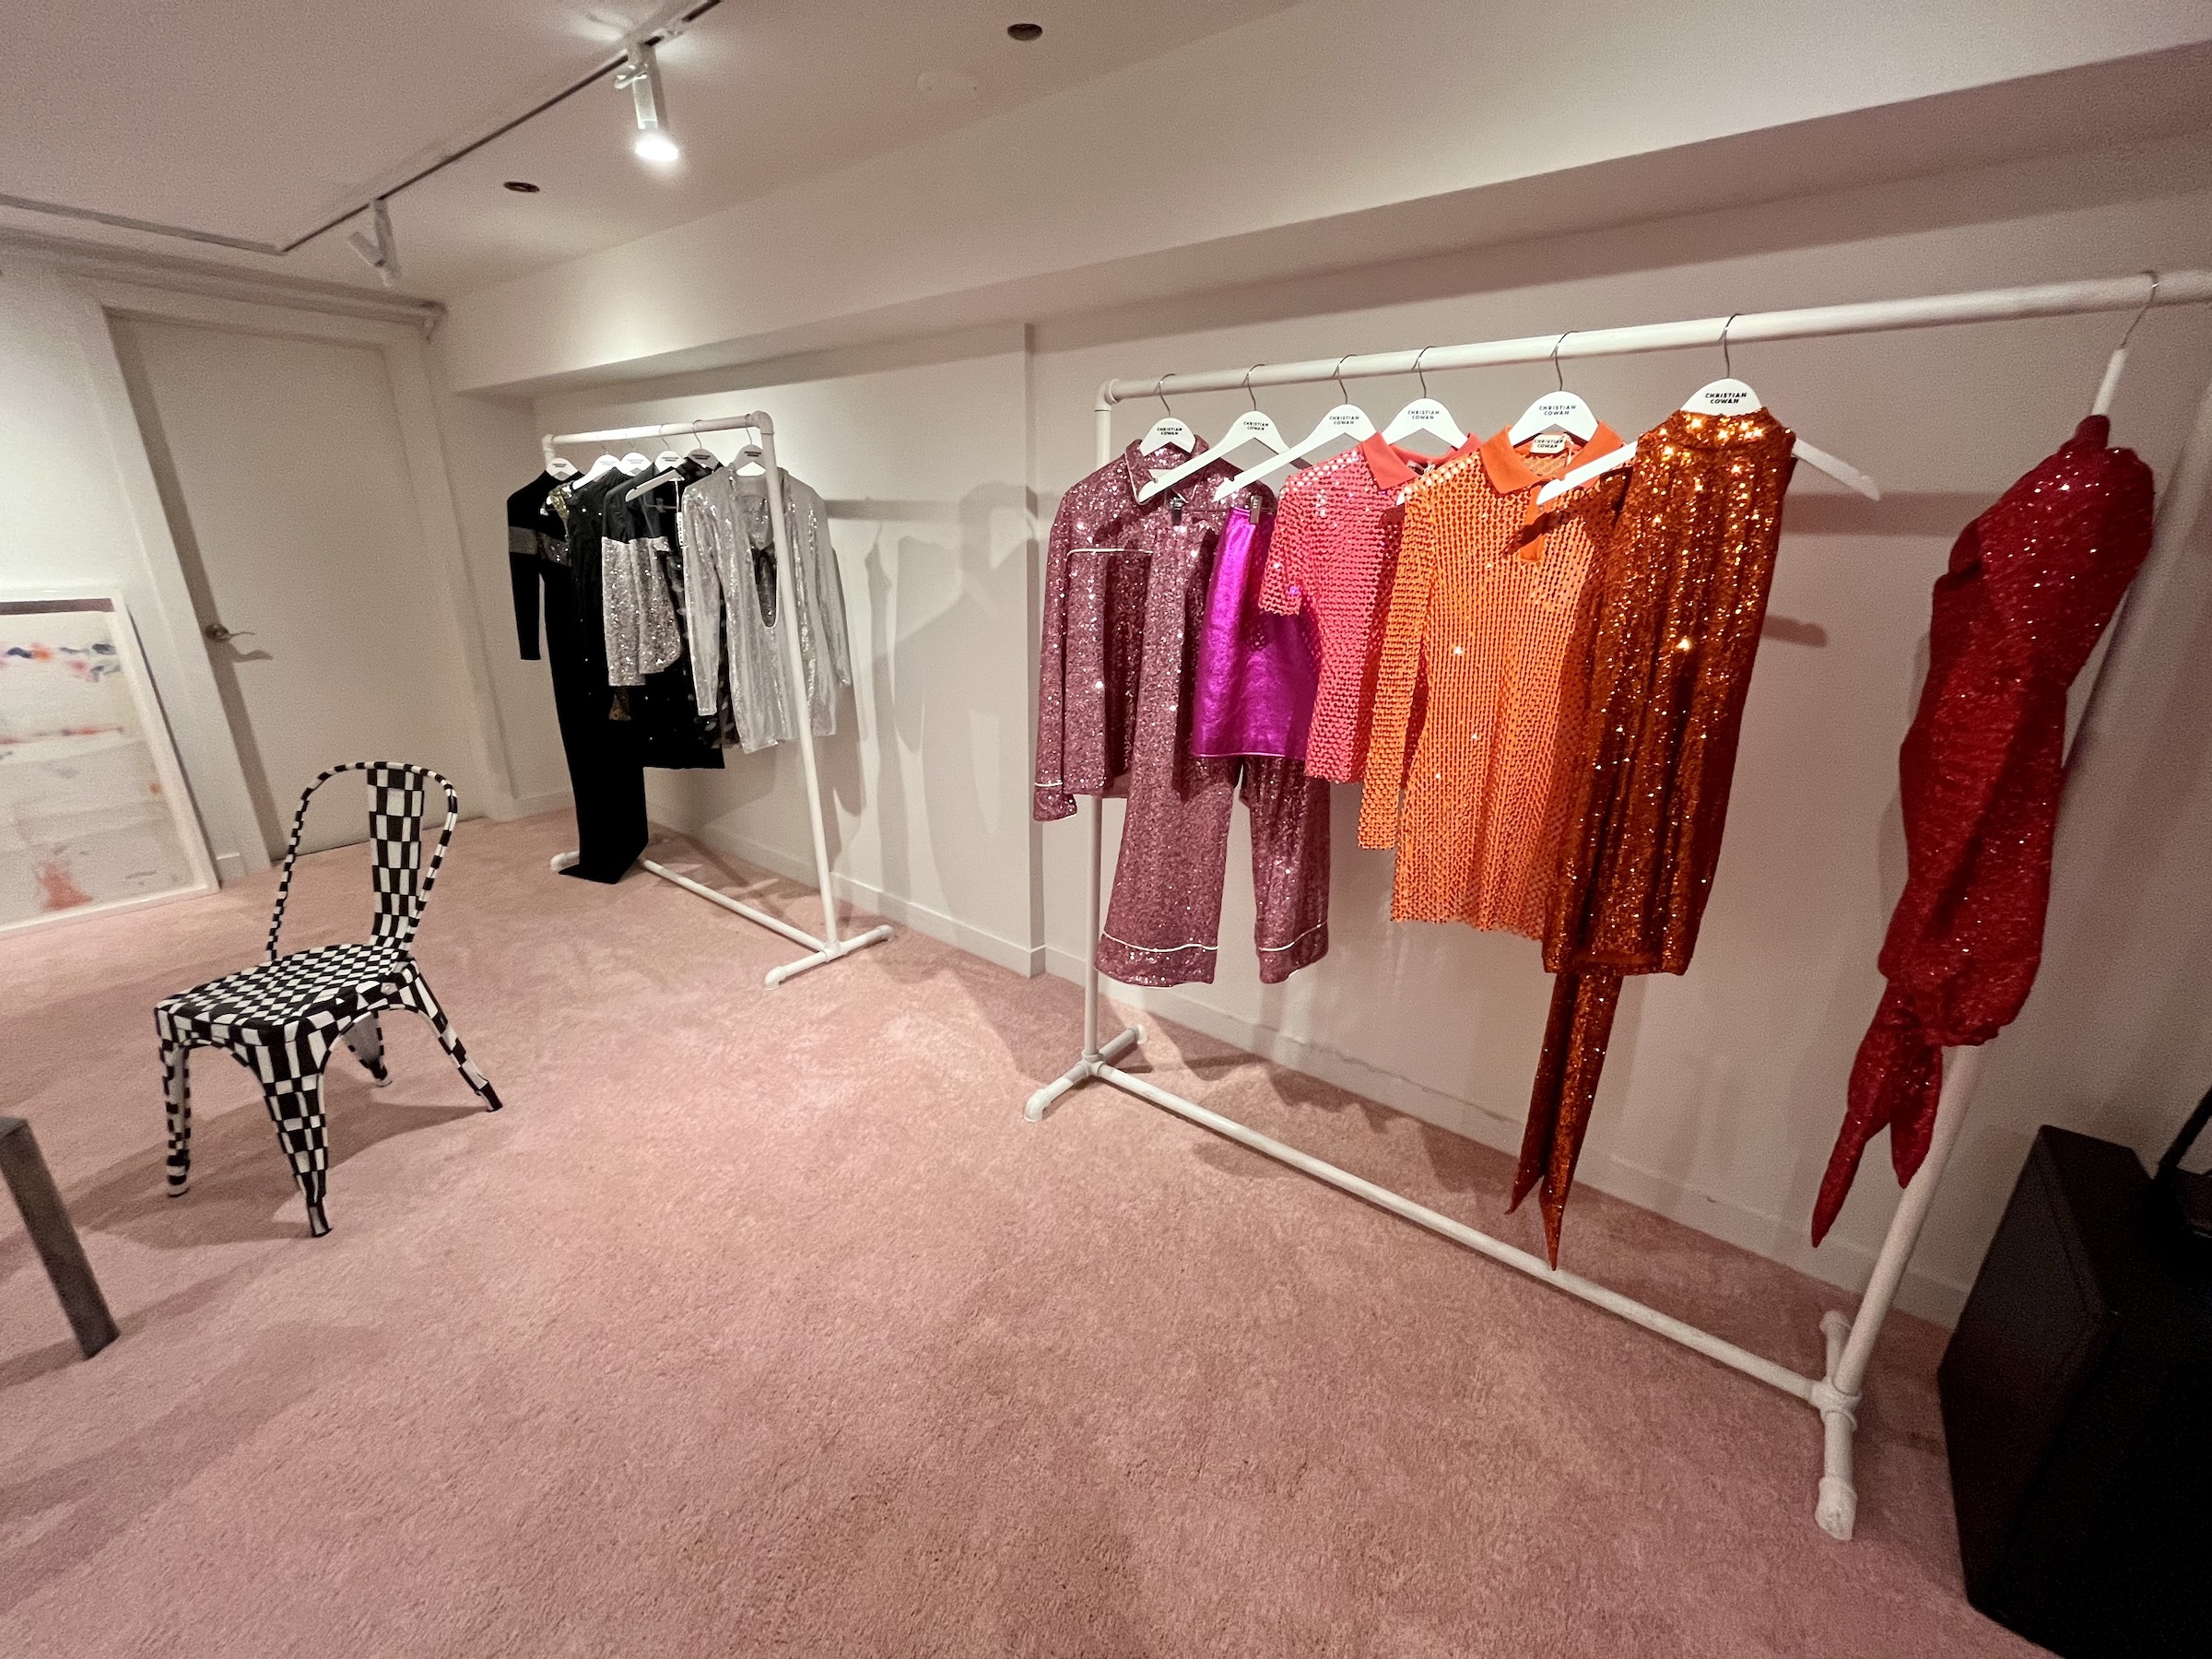 FENDI Opens New York City Flagship Store - V Magazine